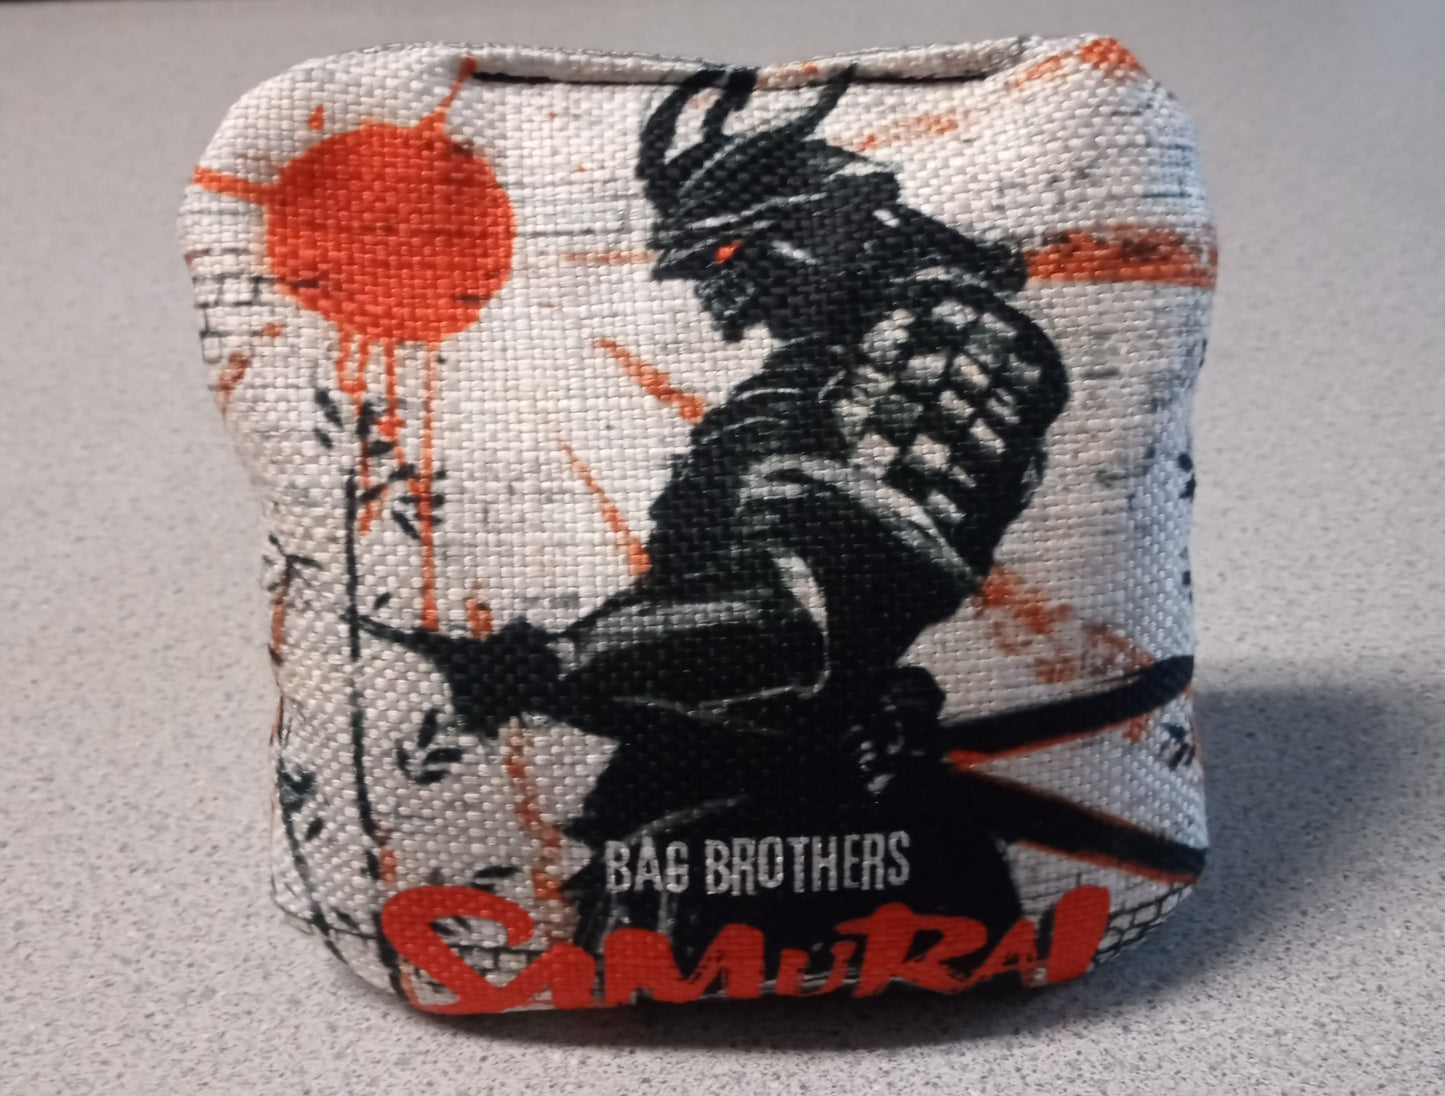 The Samurai Cornhole Bag